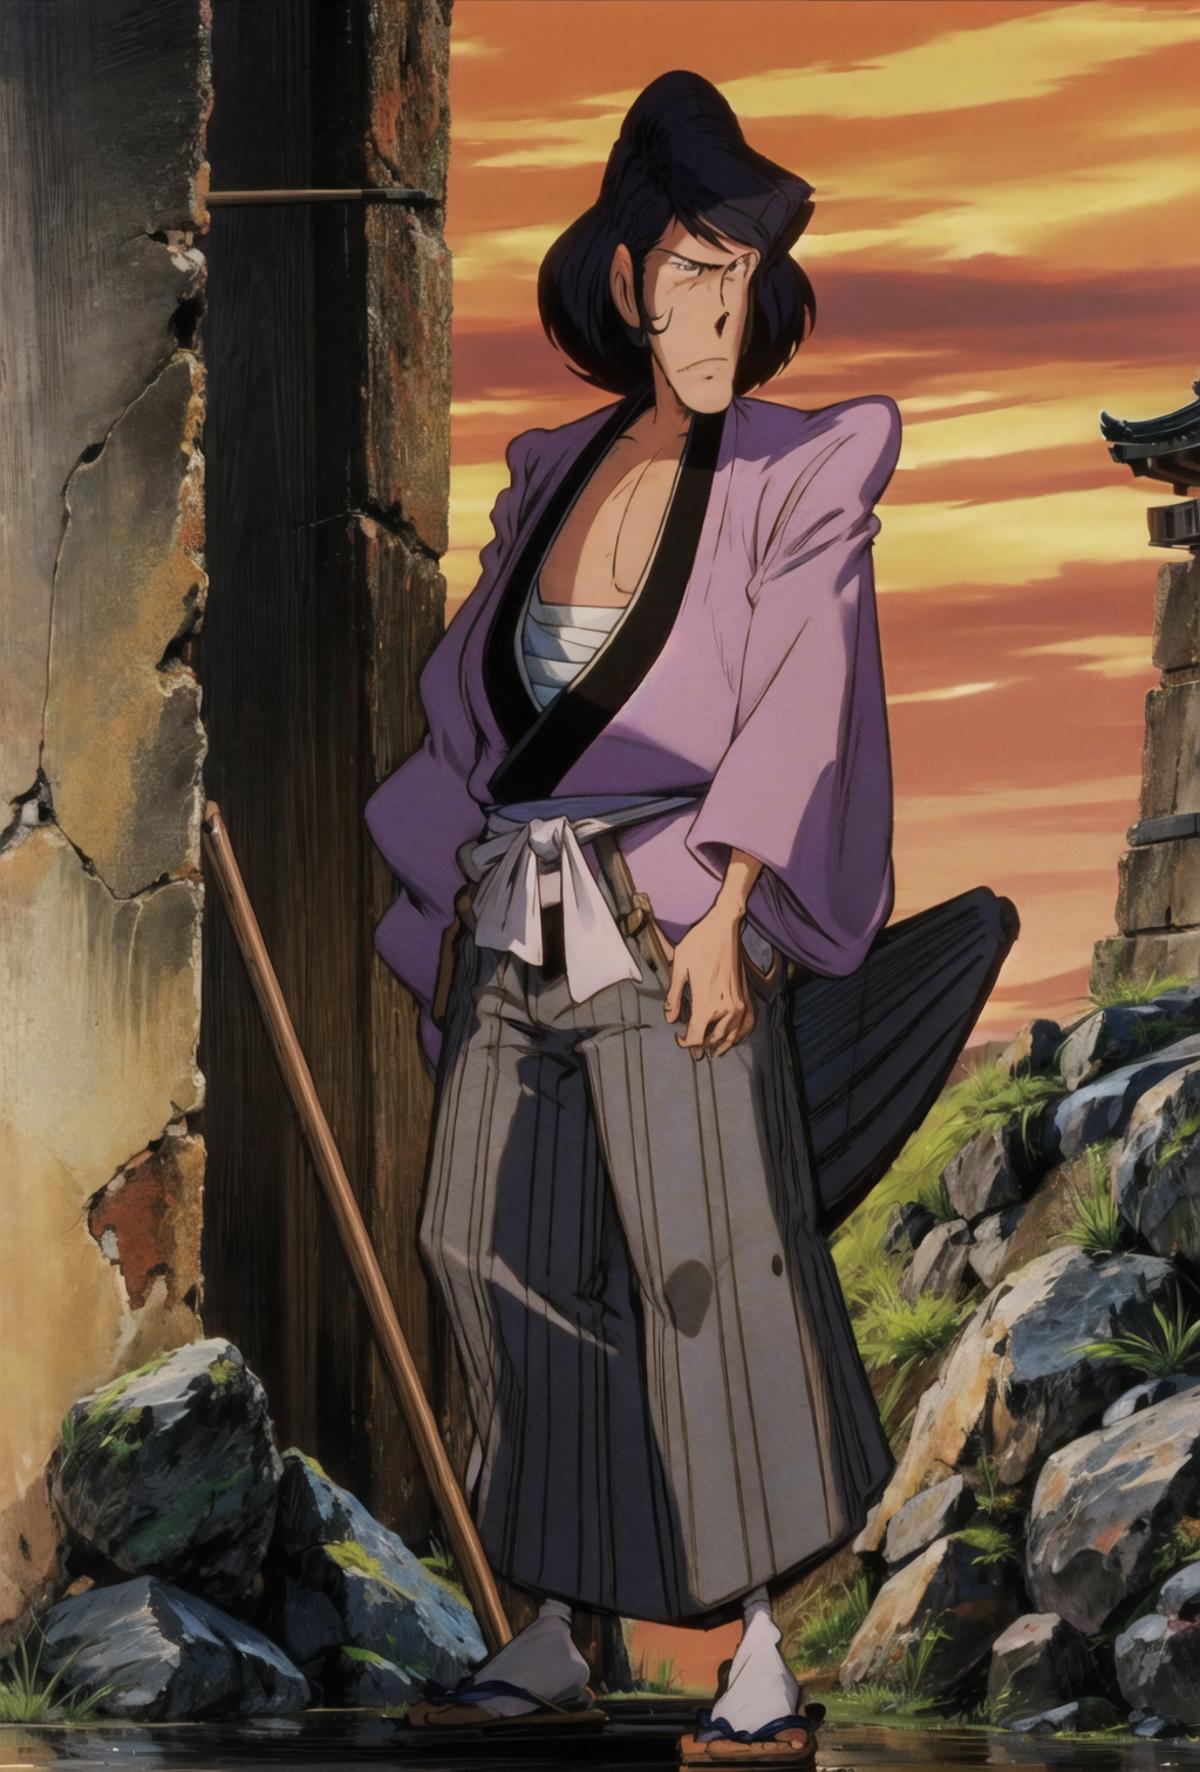 Goemon Ishikawa XIII - Lupin III image by Fenchurch